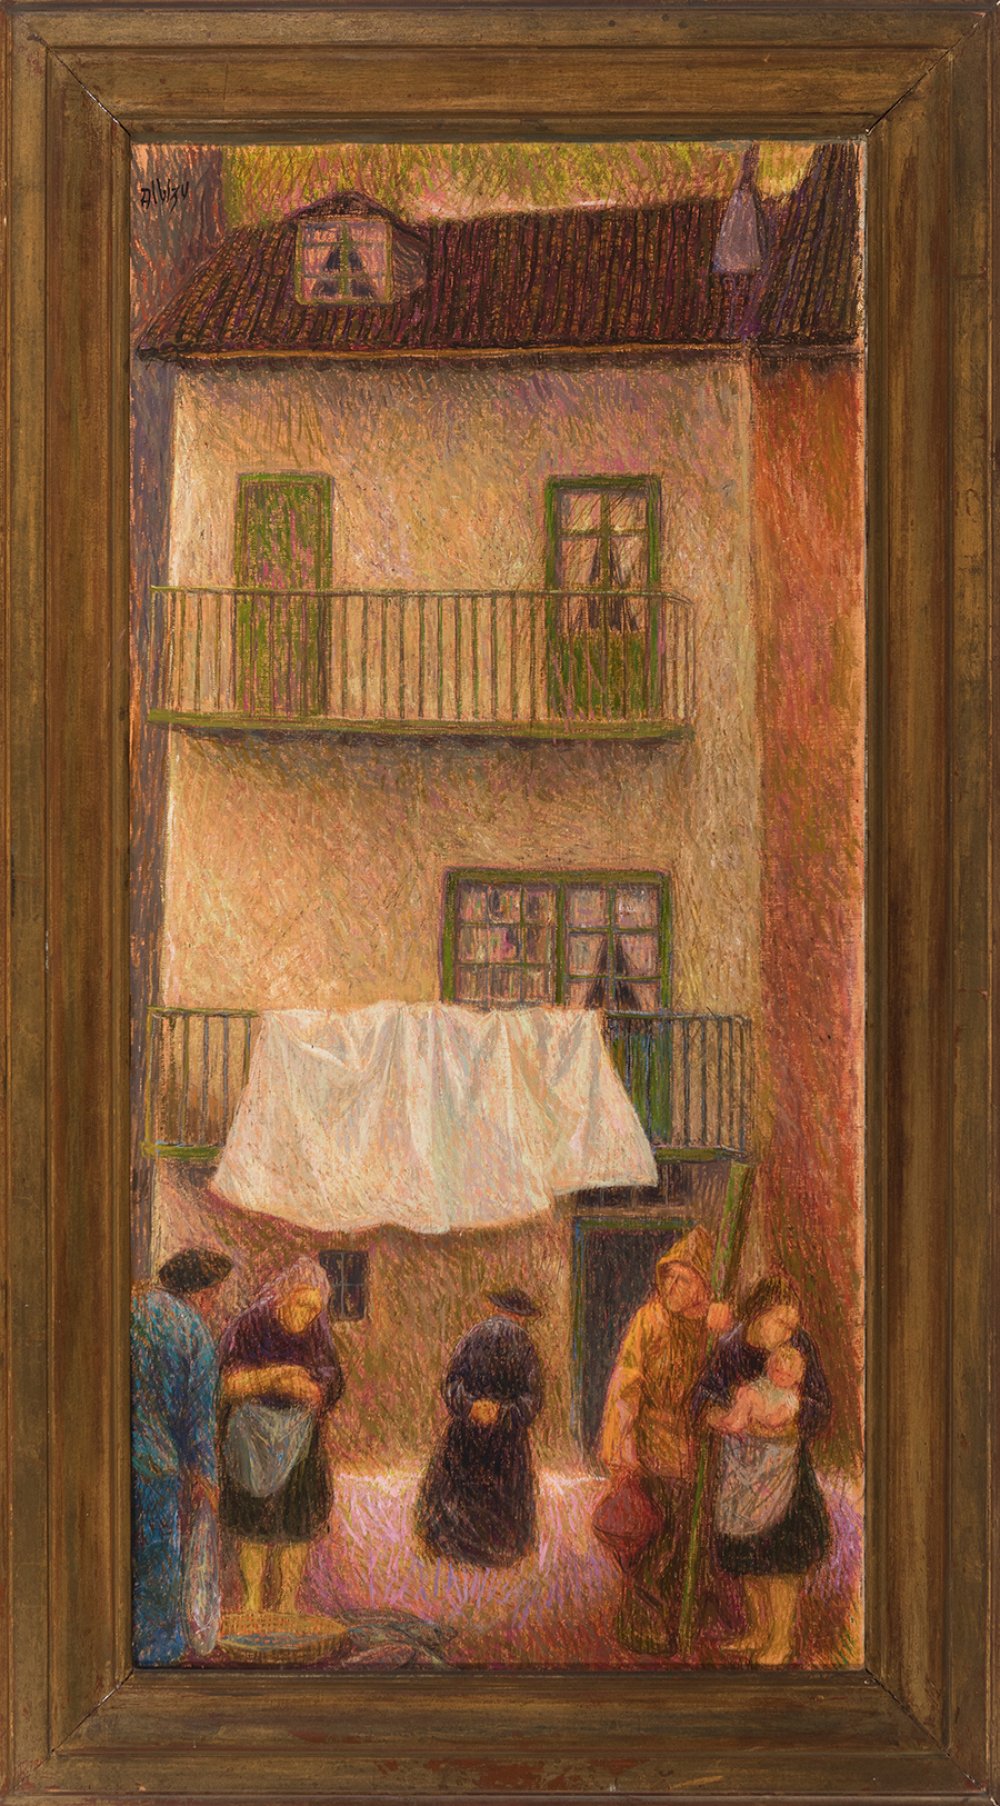 ENRIQUE ALBIZU (Valencia, 1926 - Fuenterrabía, 2014) ."Village scene".Oil on canvas.Signed in the - Image 4 of 4